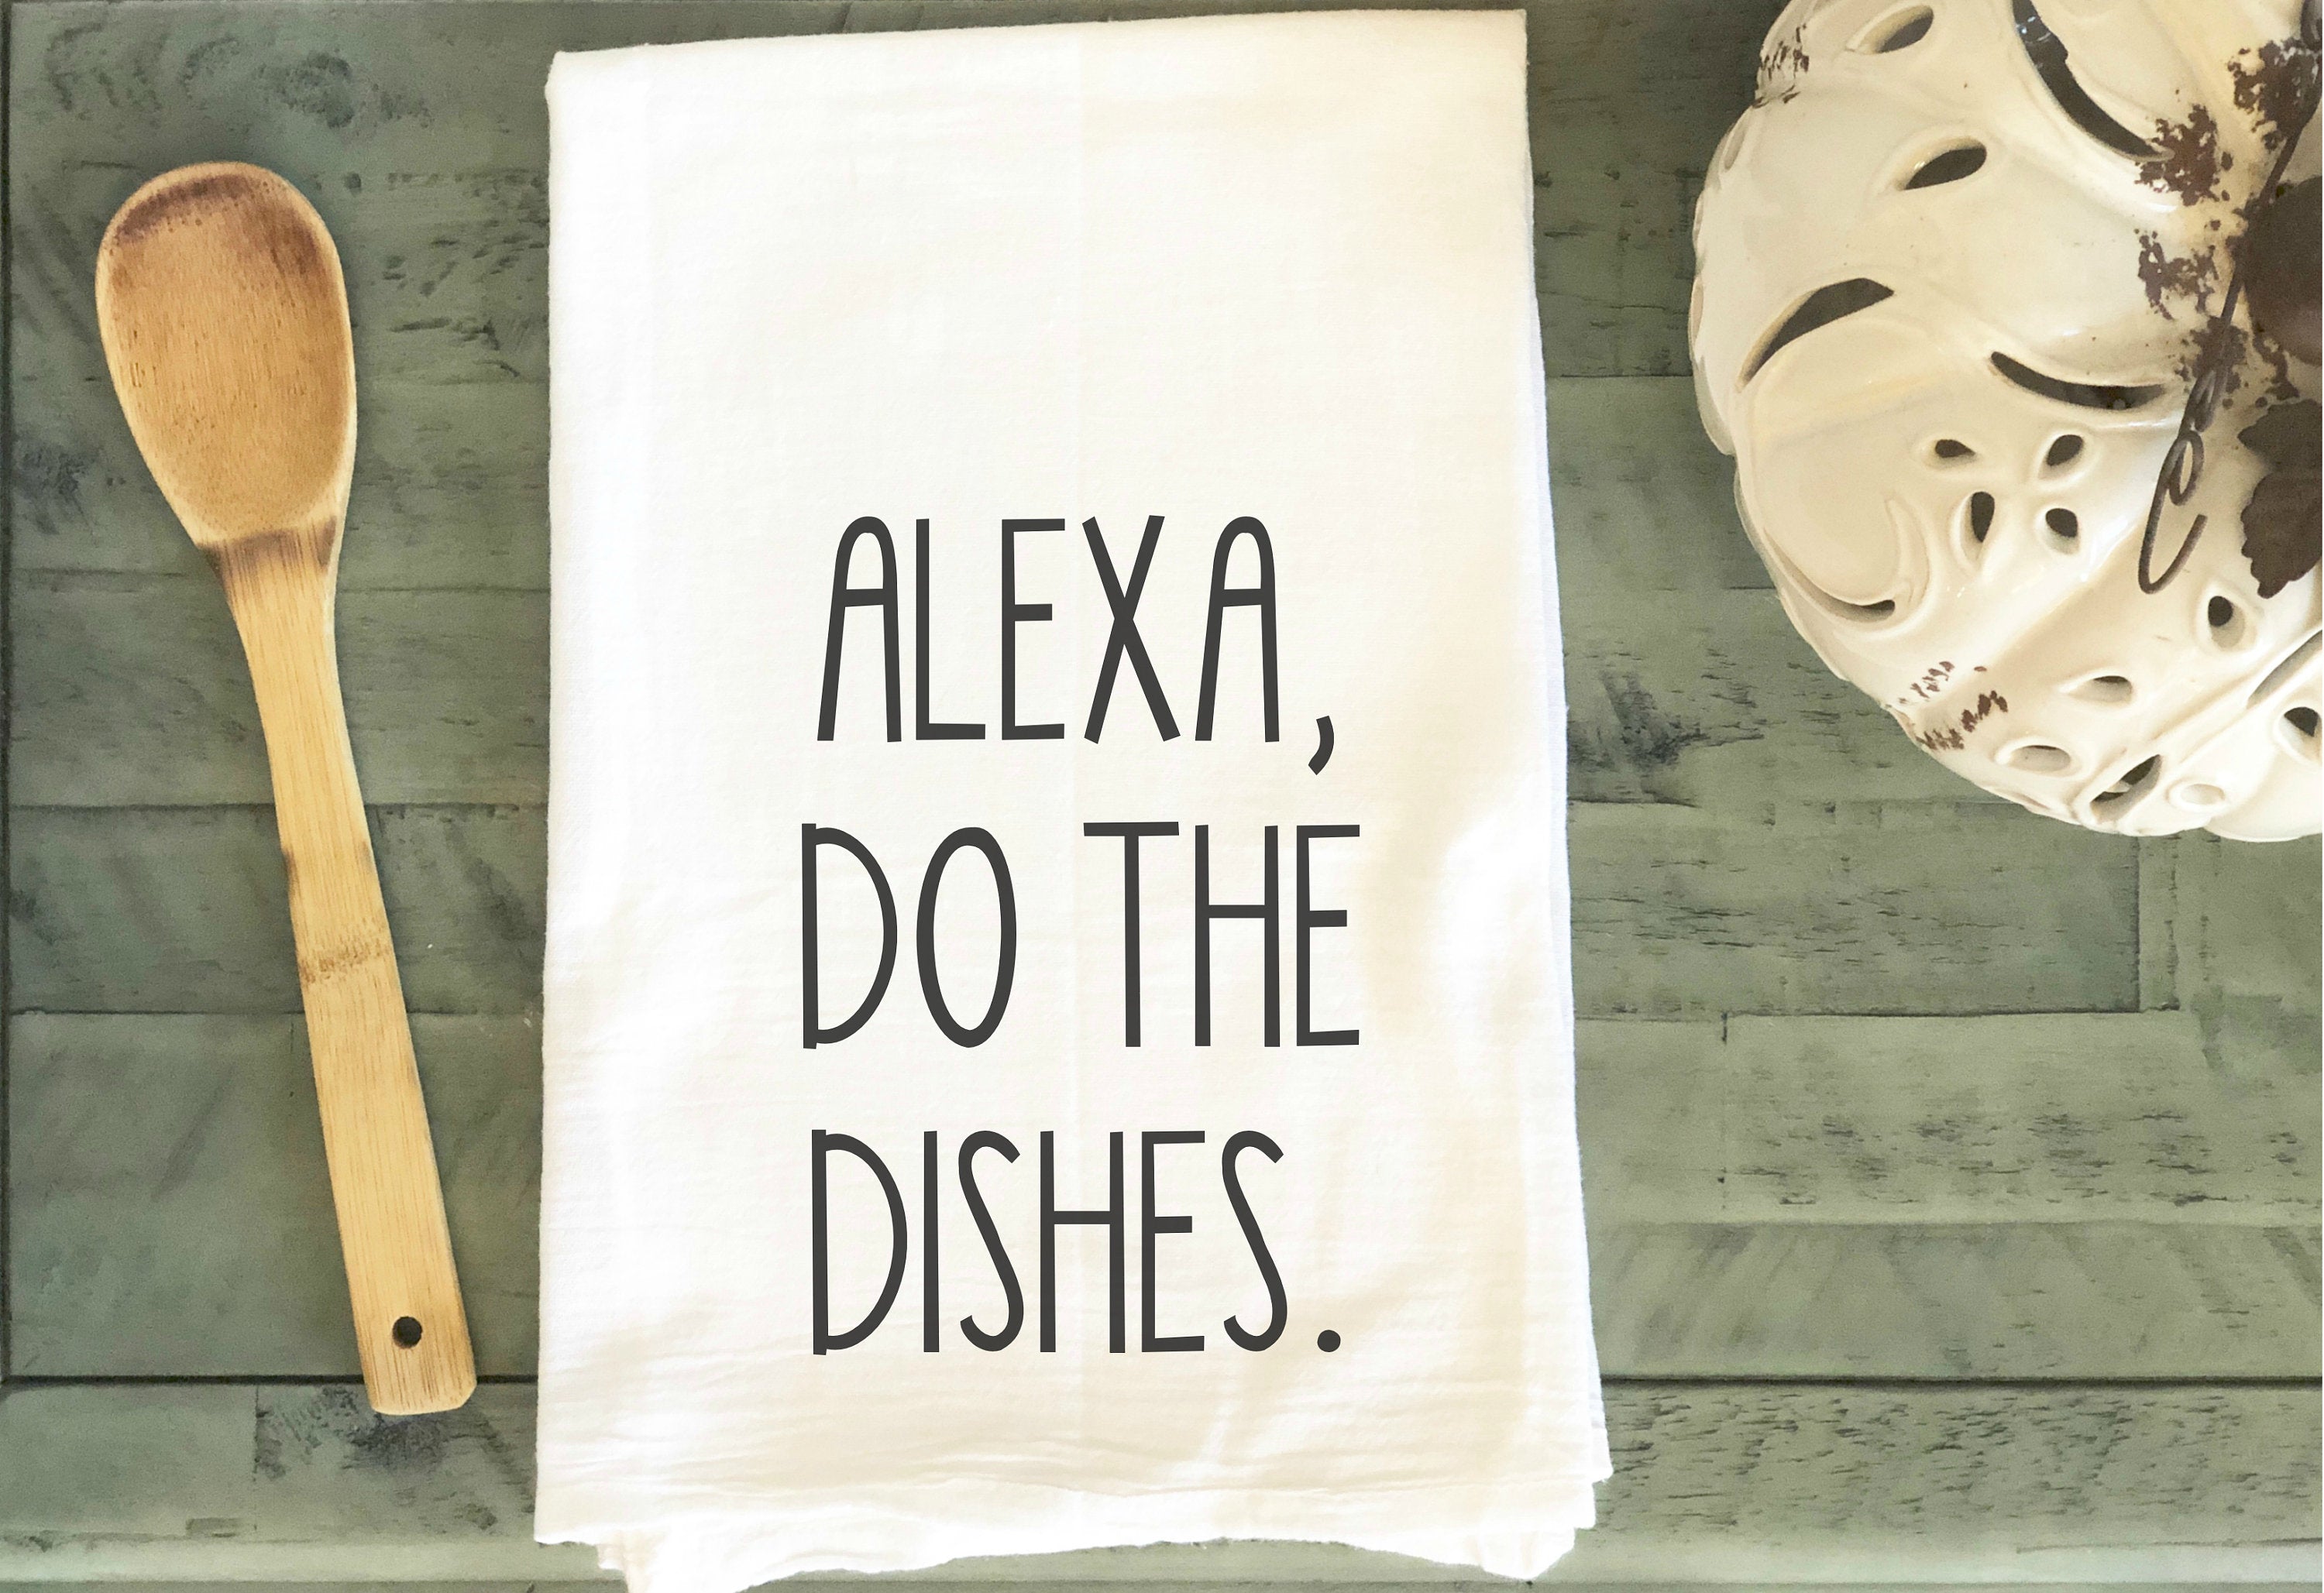 Alexa, Do The Dishes Flour Sack Tea Towels, Rae Dunn Inspired